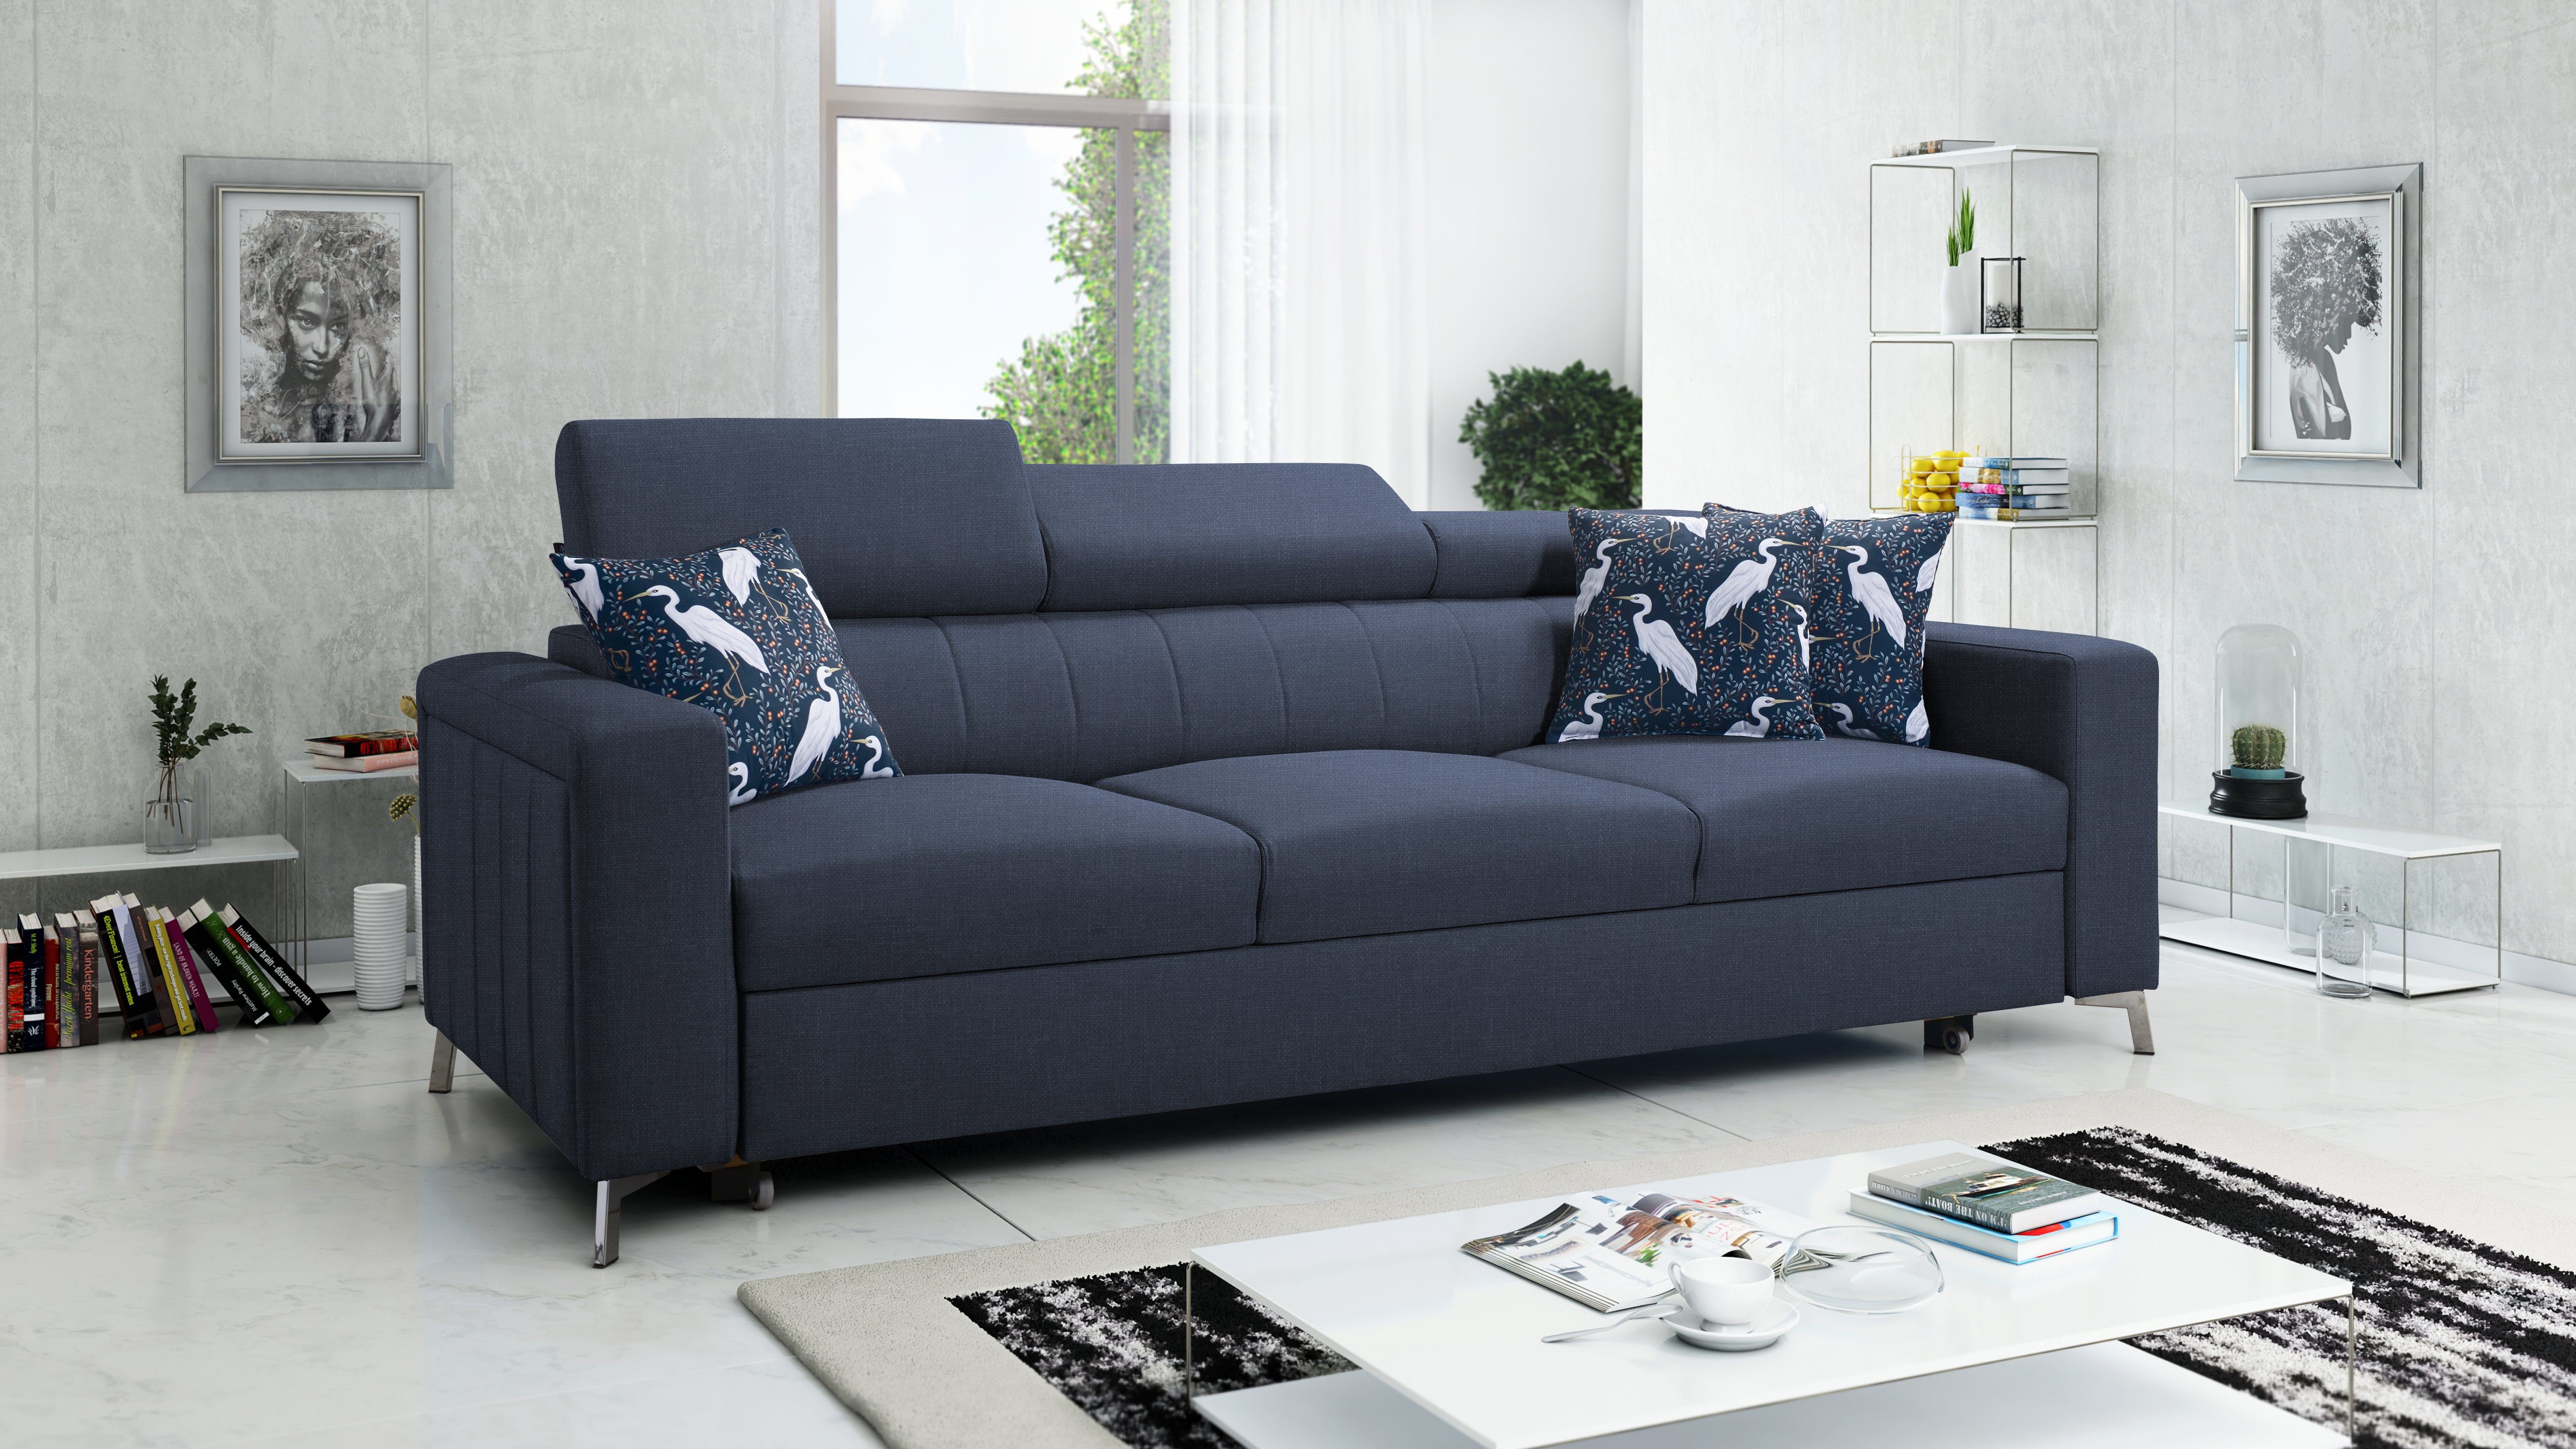 SAWANA80 Best for BERTA Home Sofa